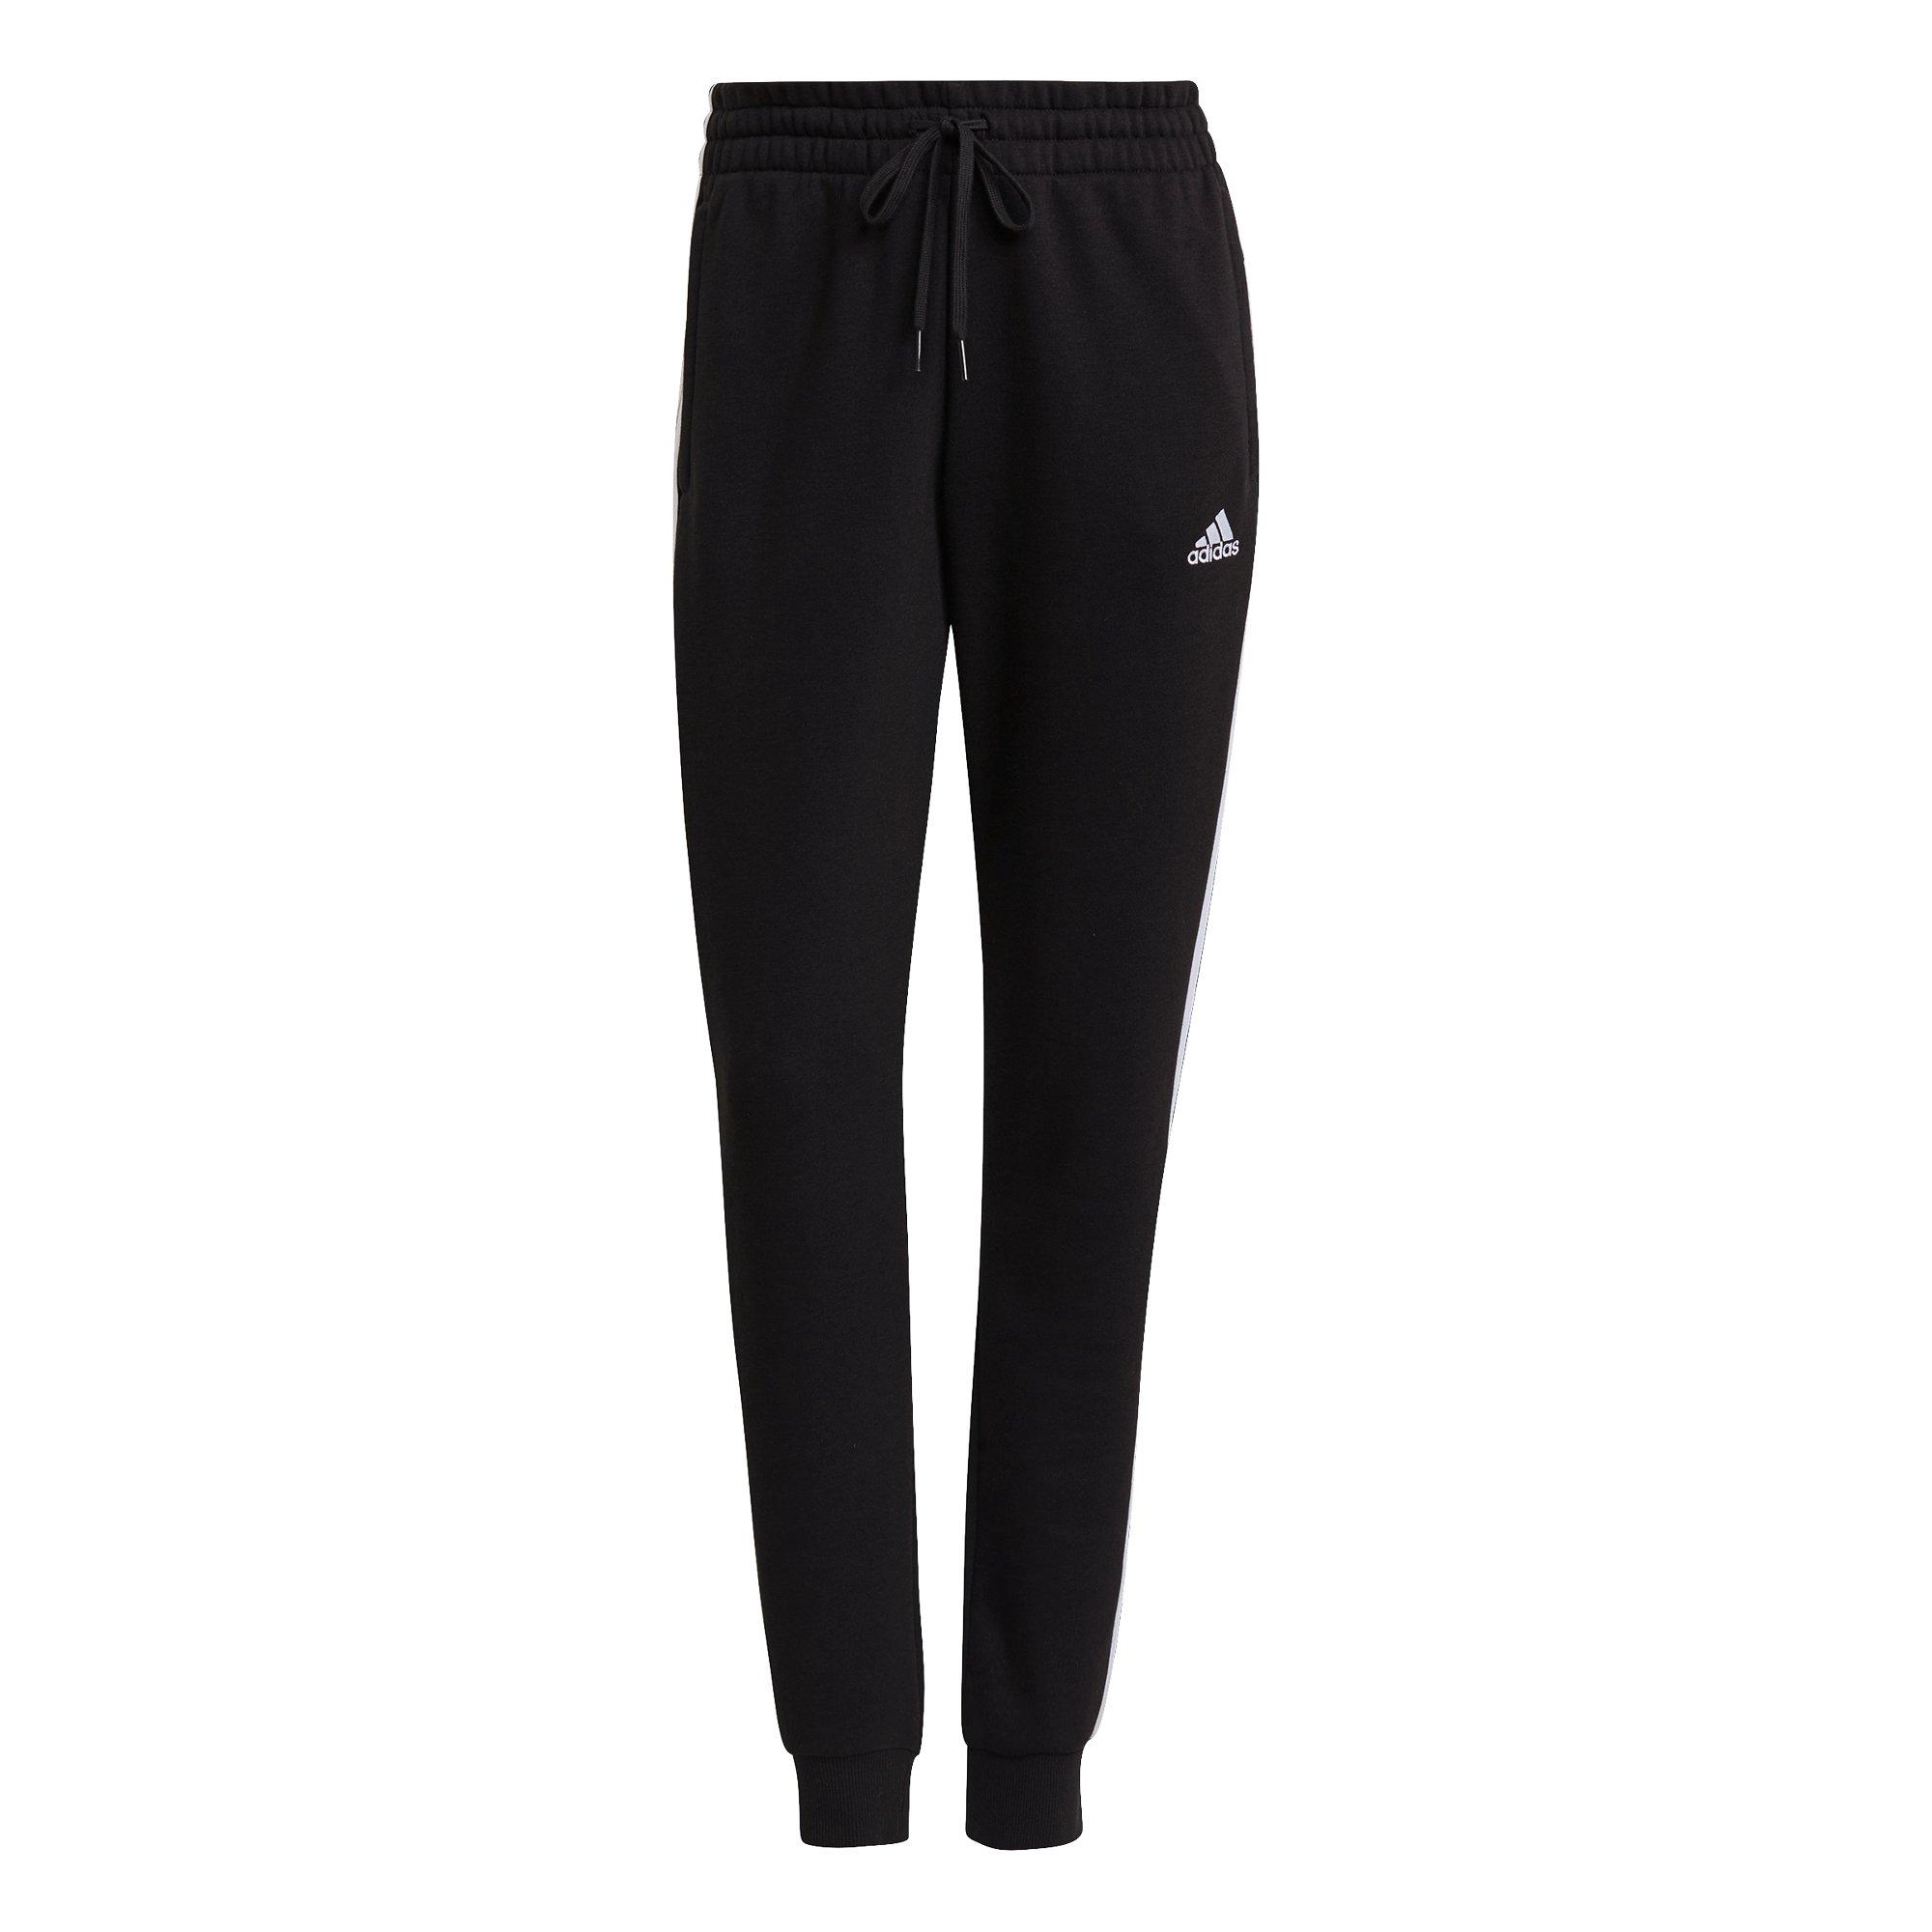 adidas Women's Black/White Fleece 3-Stripes Pants